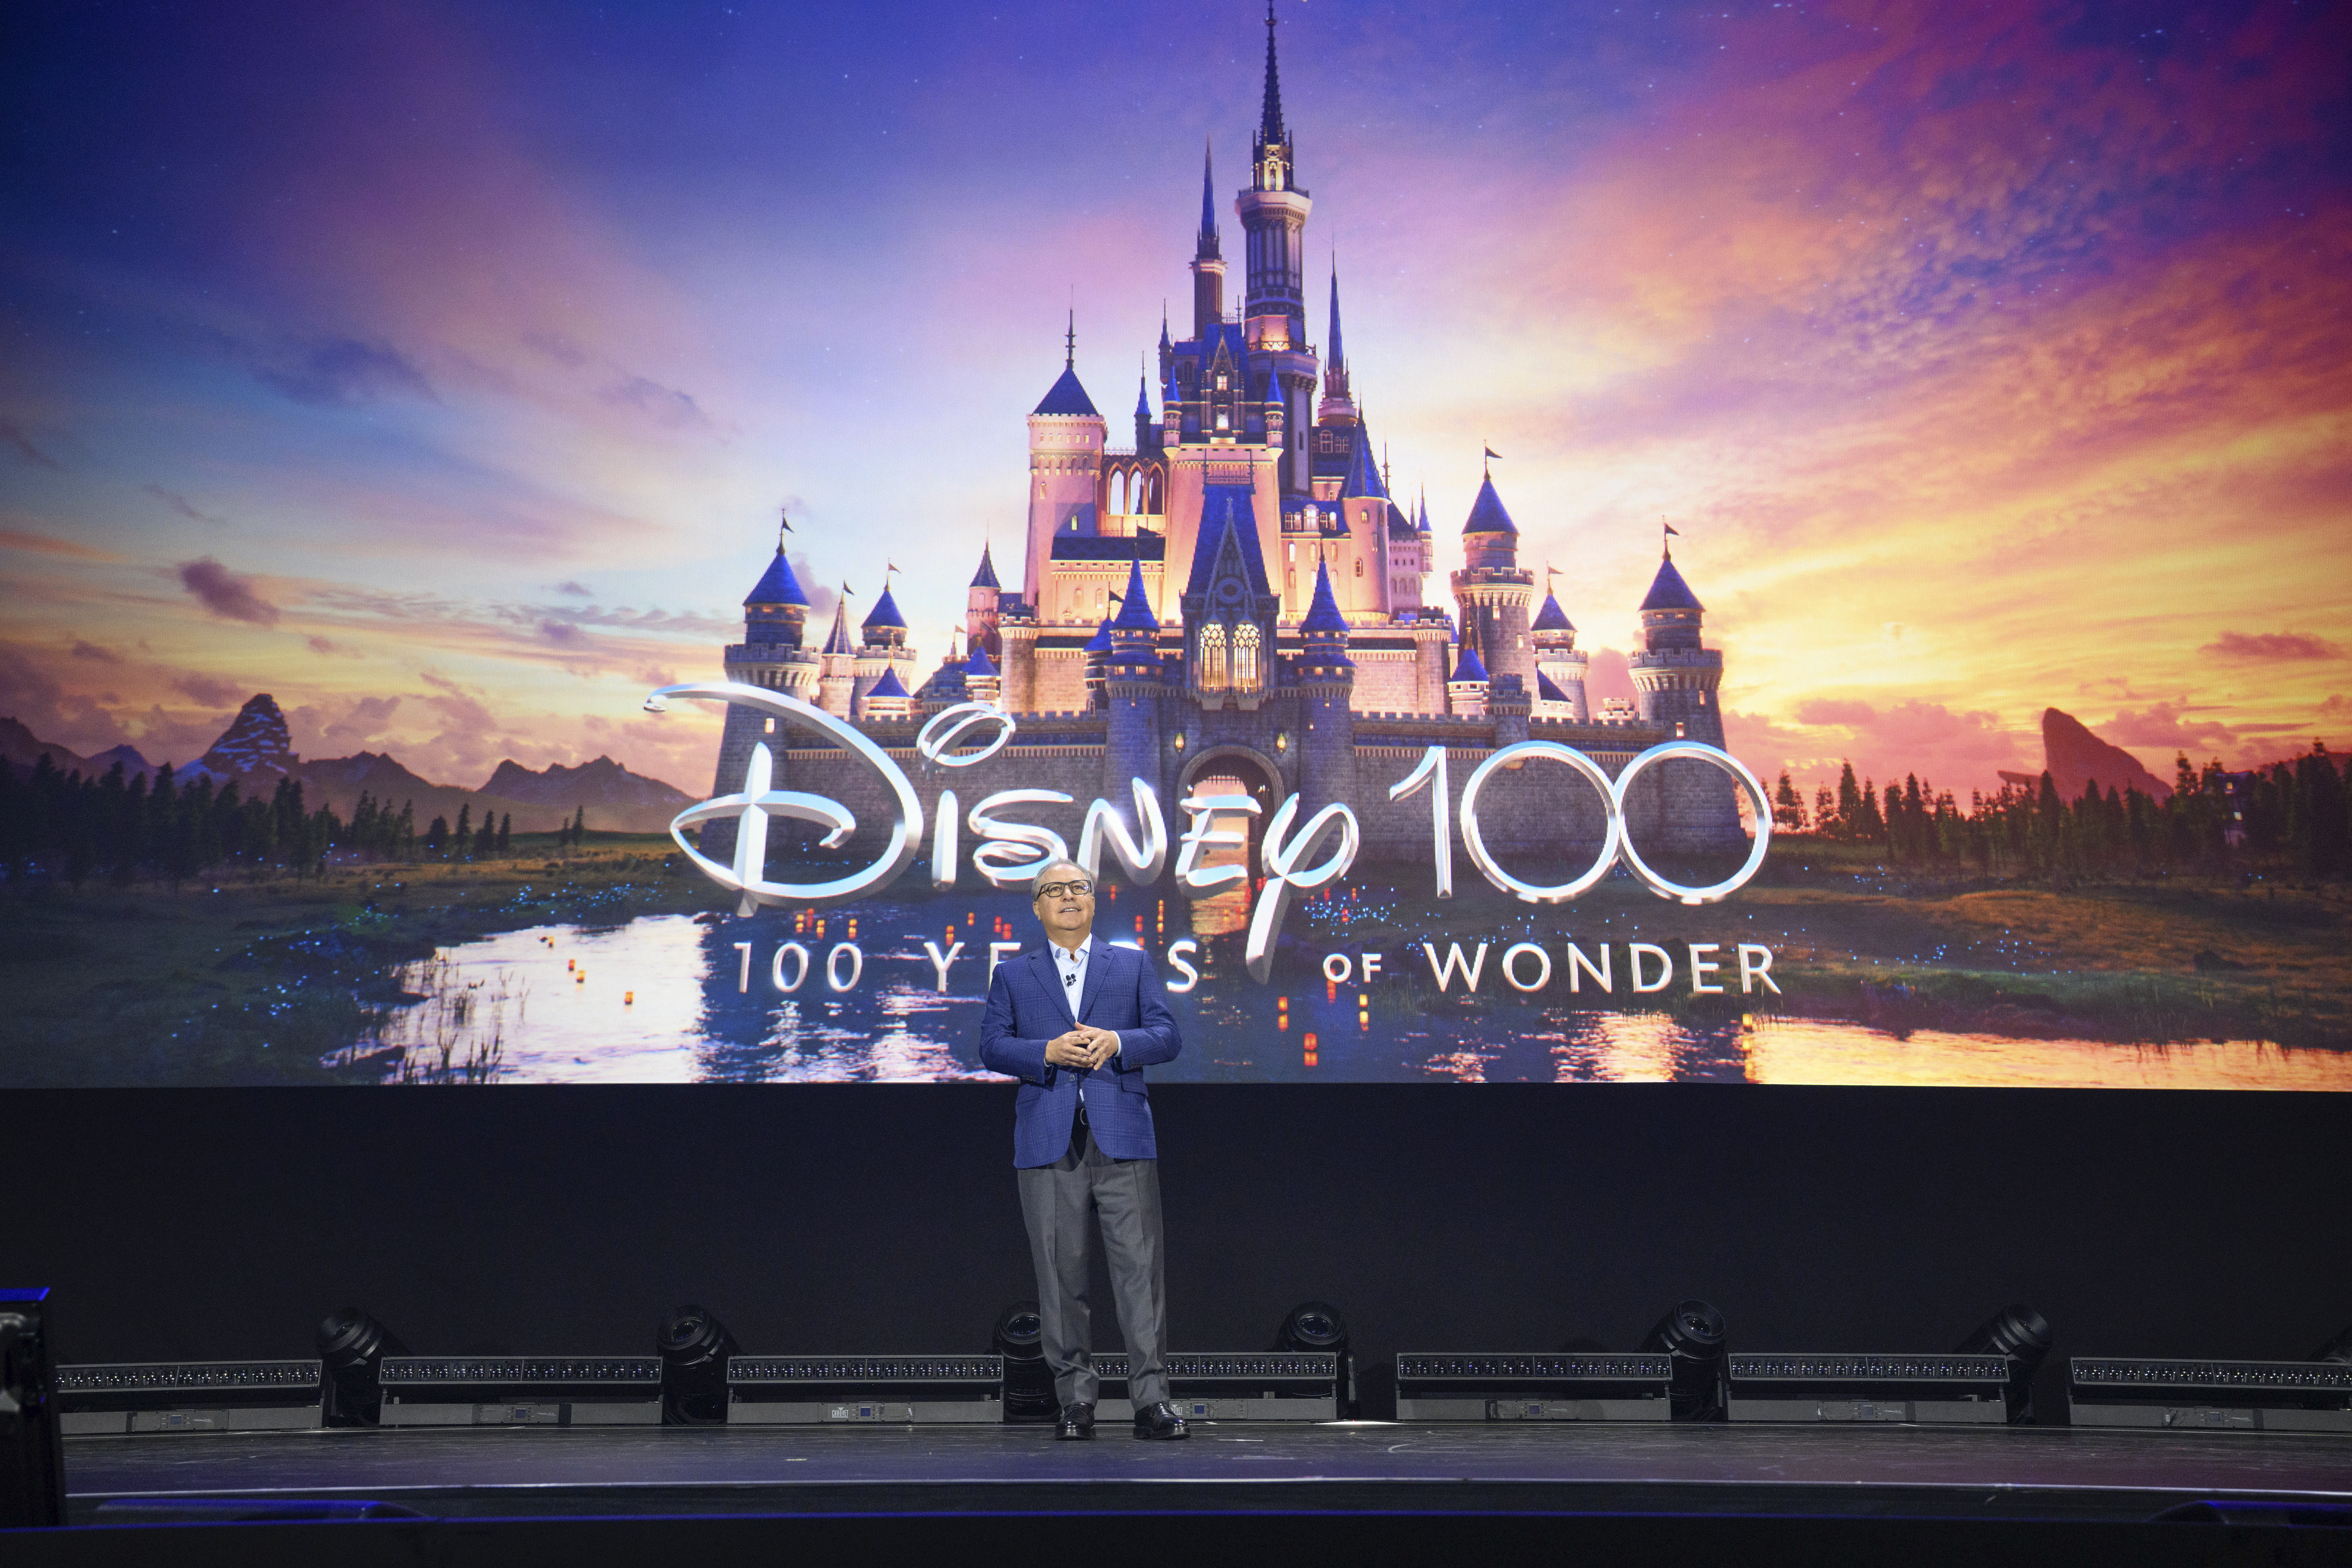 Happy 100th Anniversary Disney 100 by Tagirovo on DeviantArt